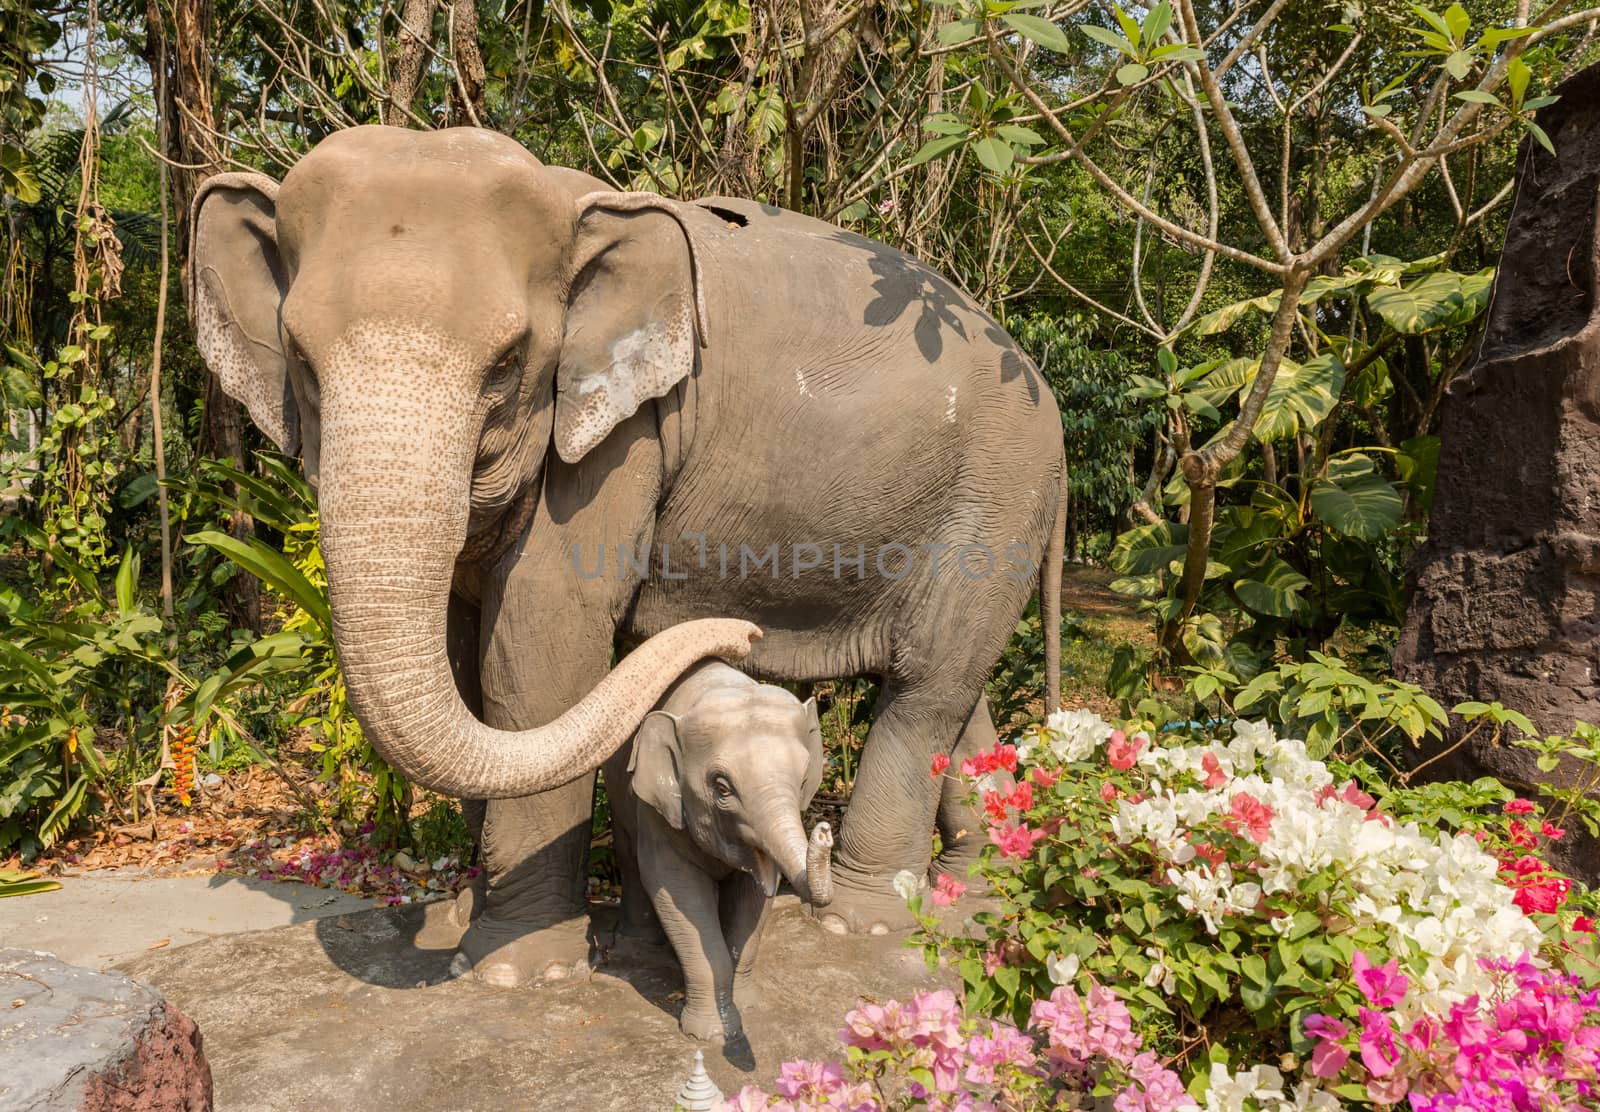 Elephant and baby elephant by Mieszko9